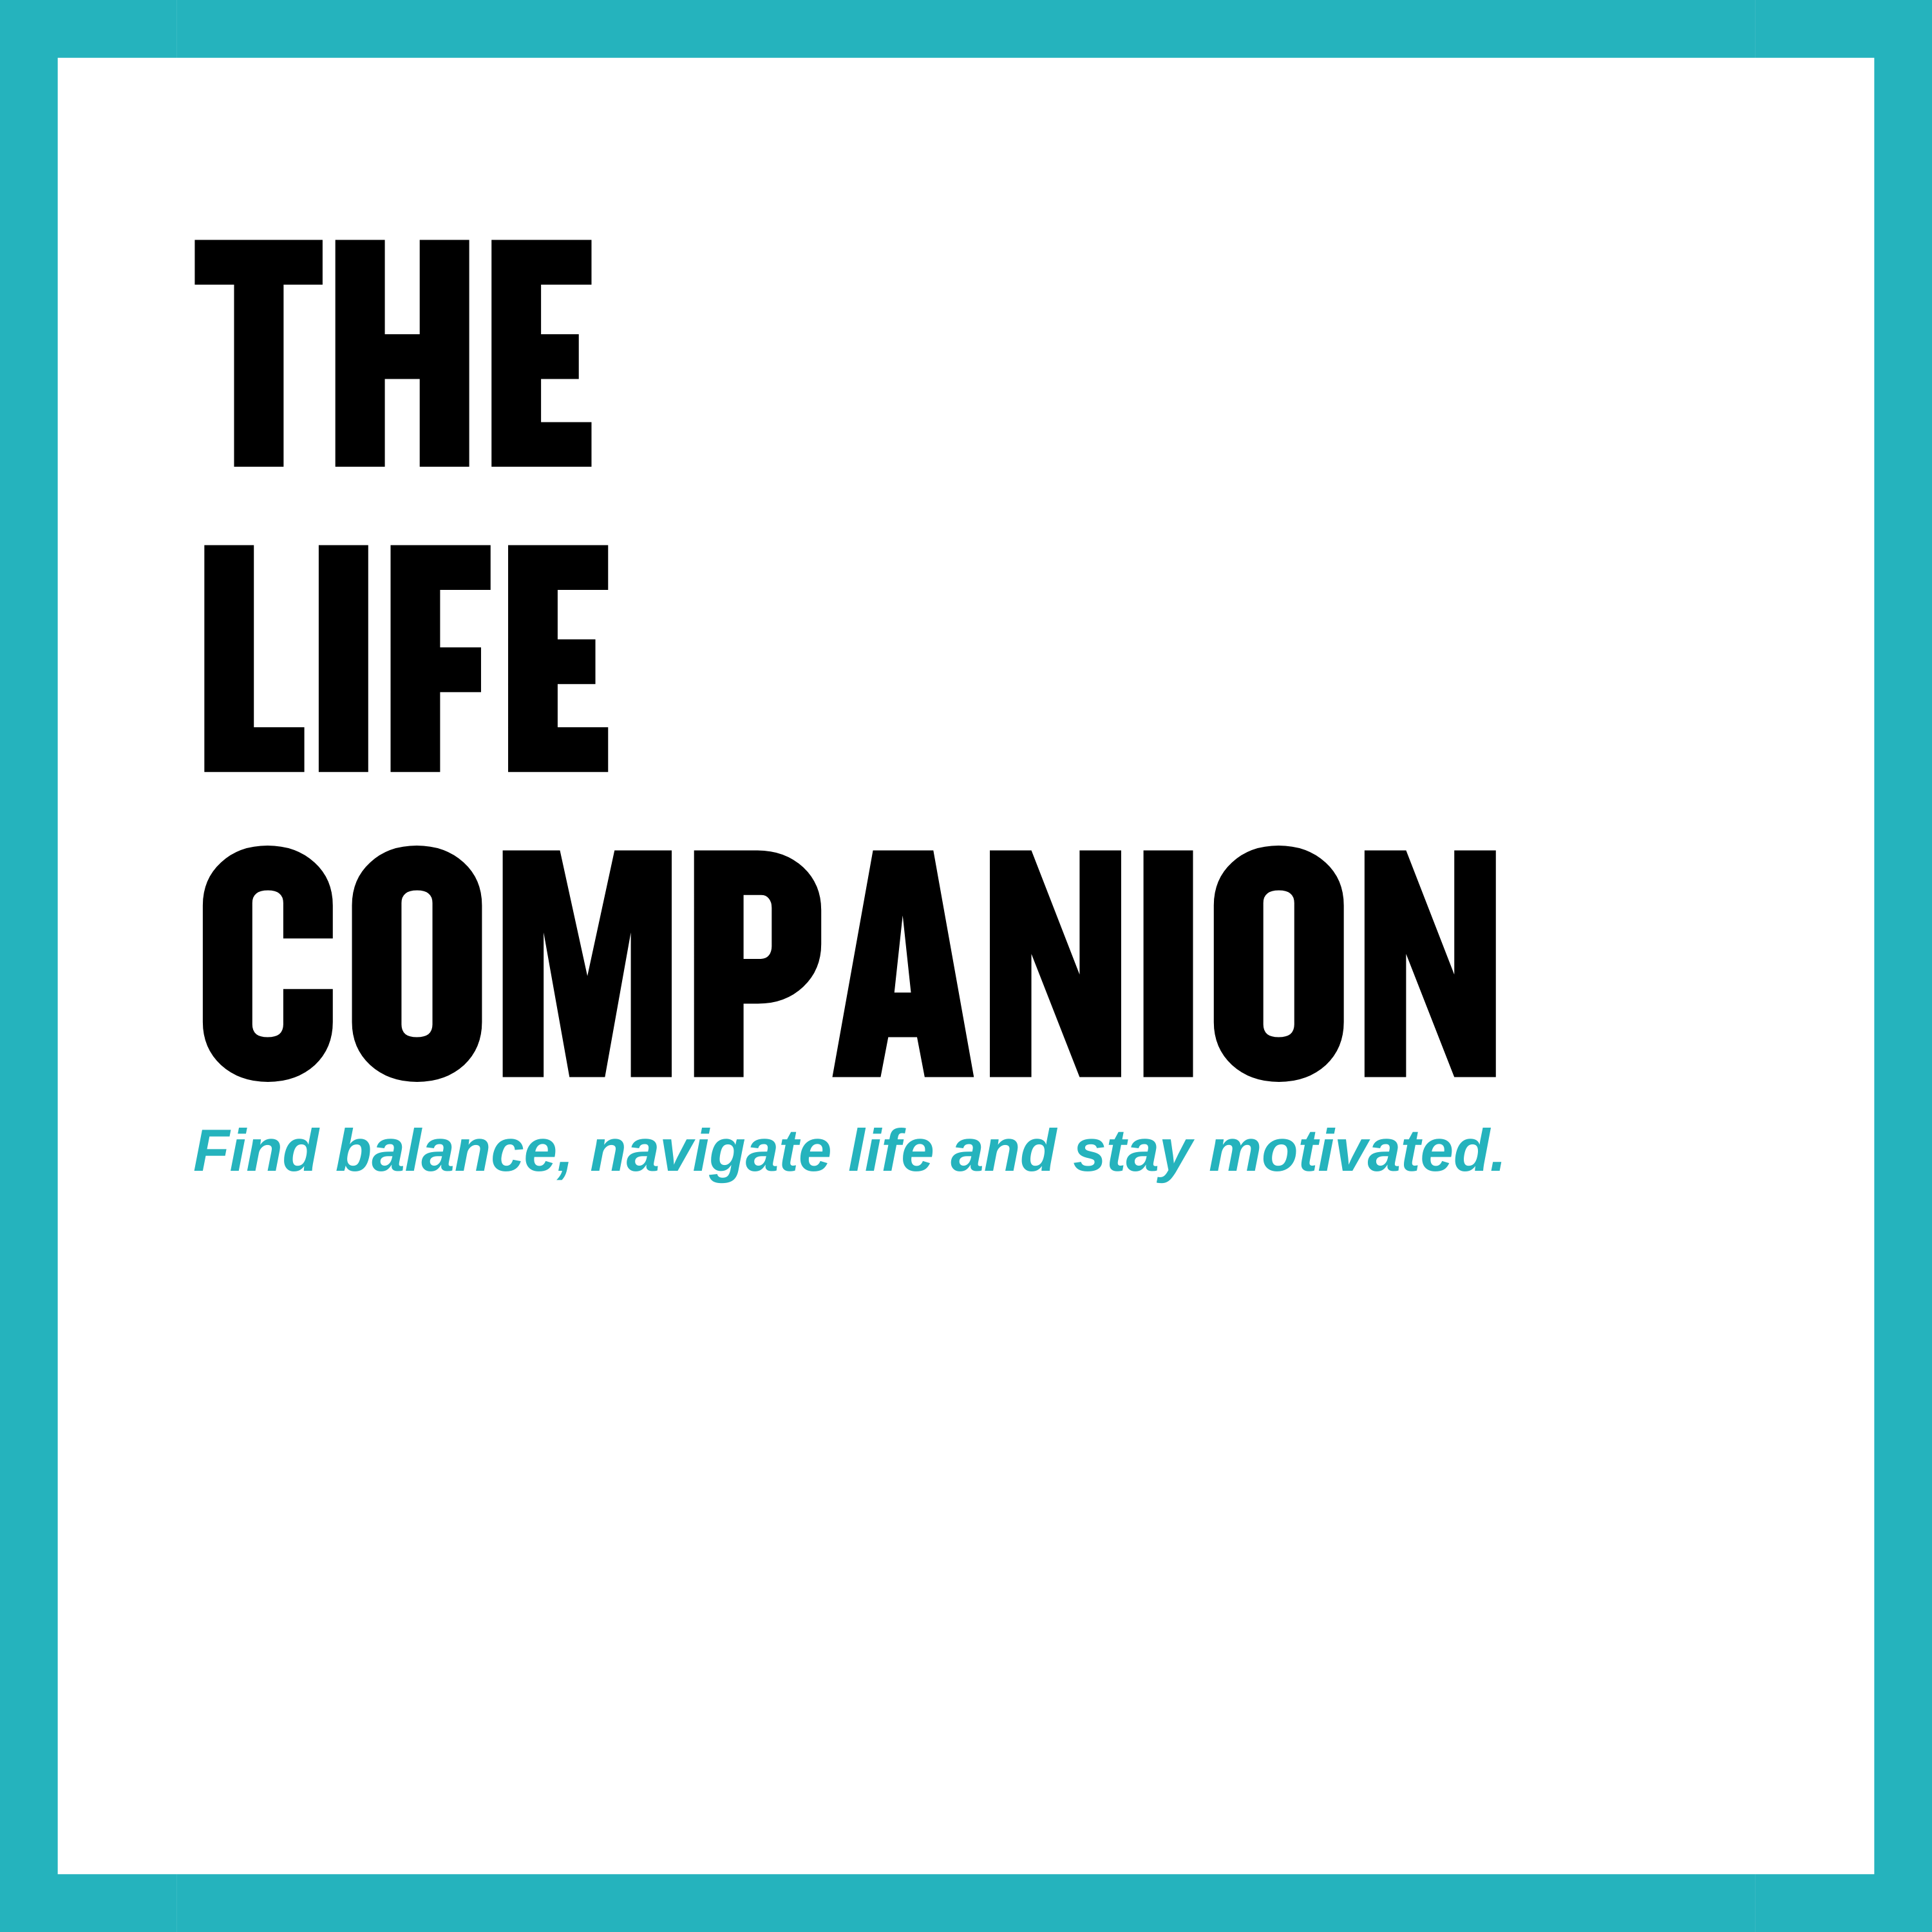 The Life Companion eBook